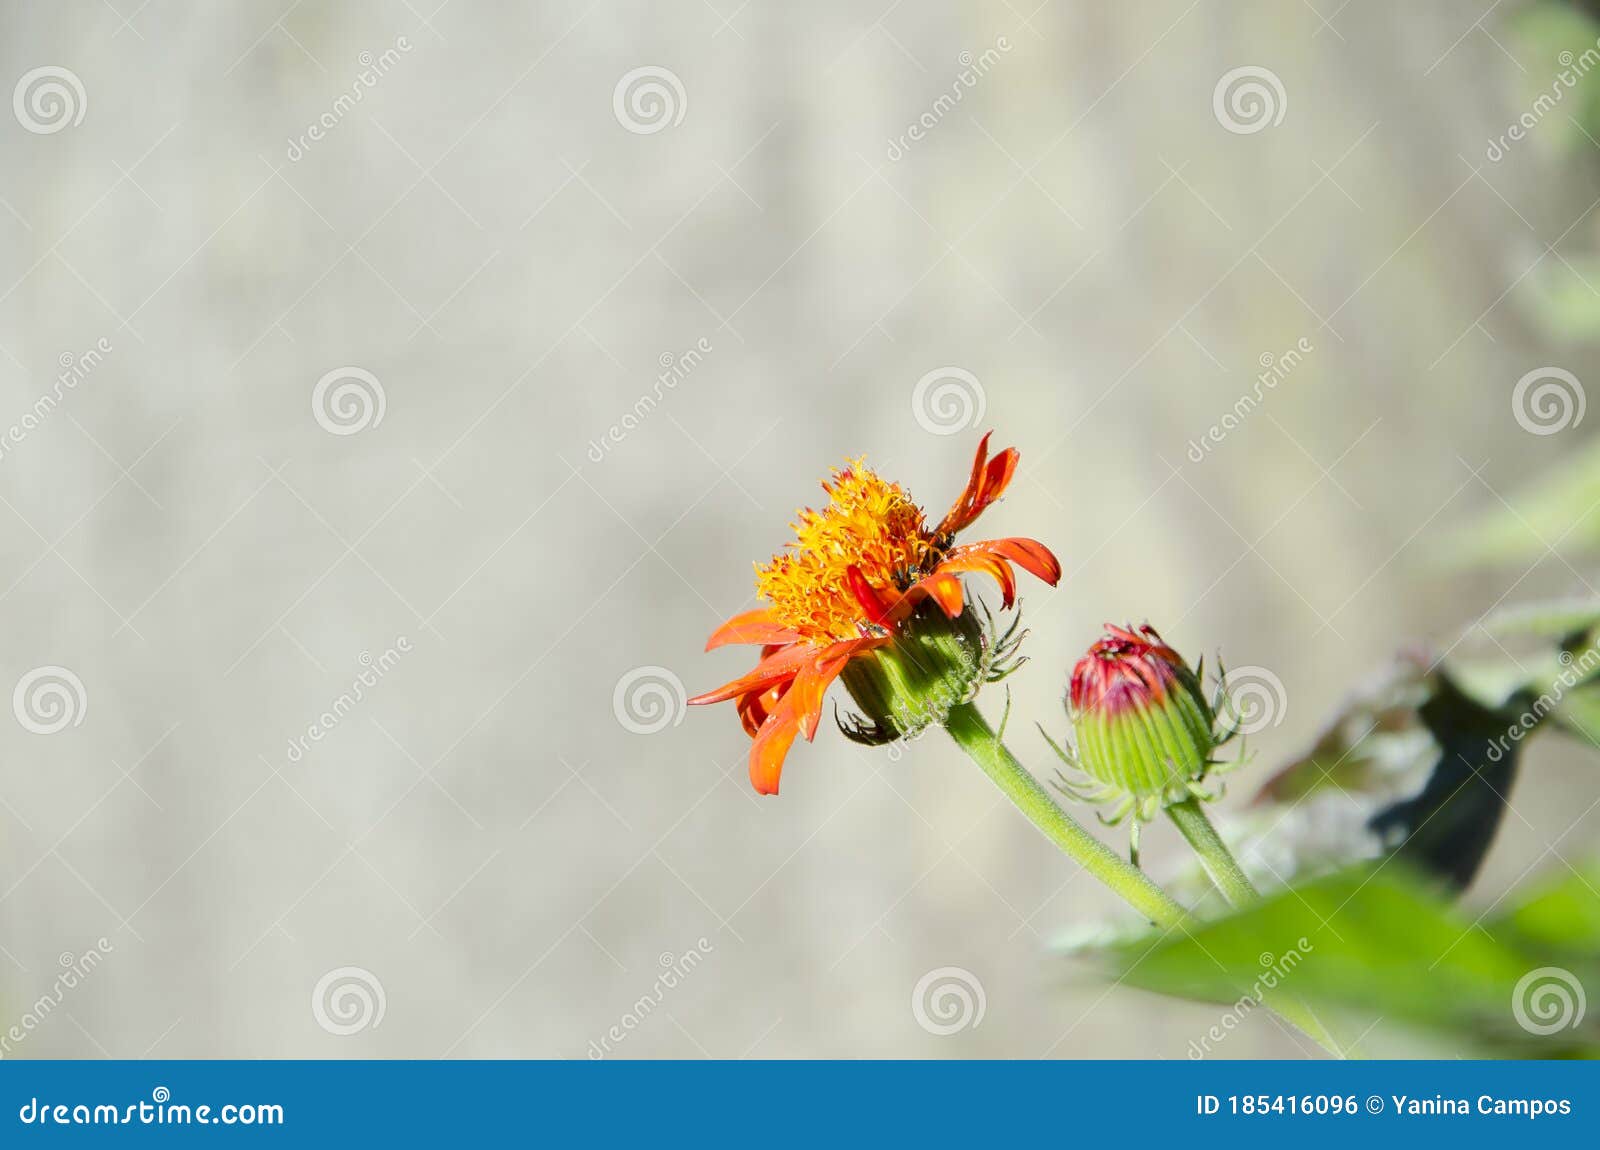 flower and bud of orange plant